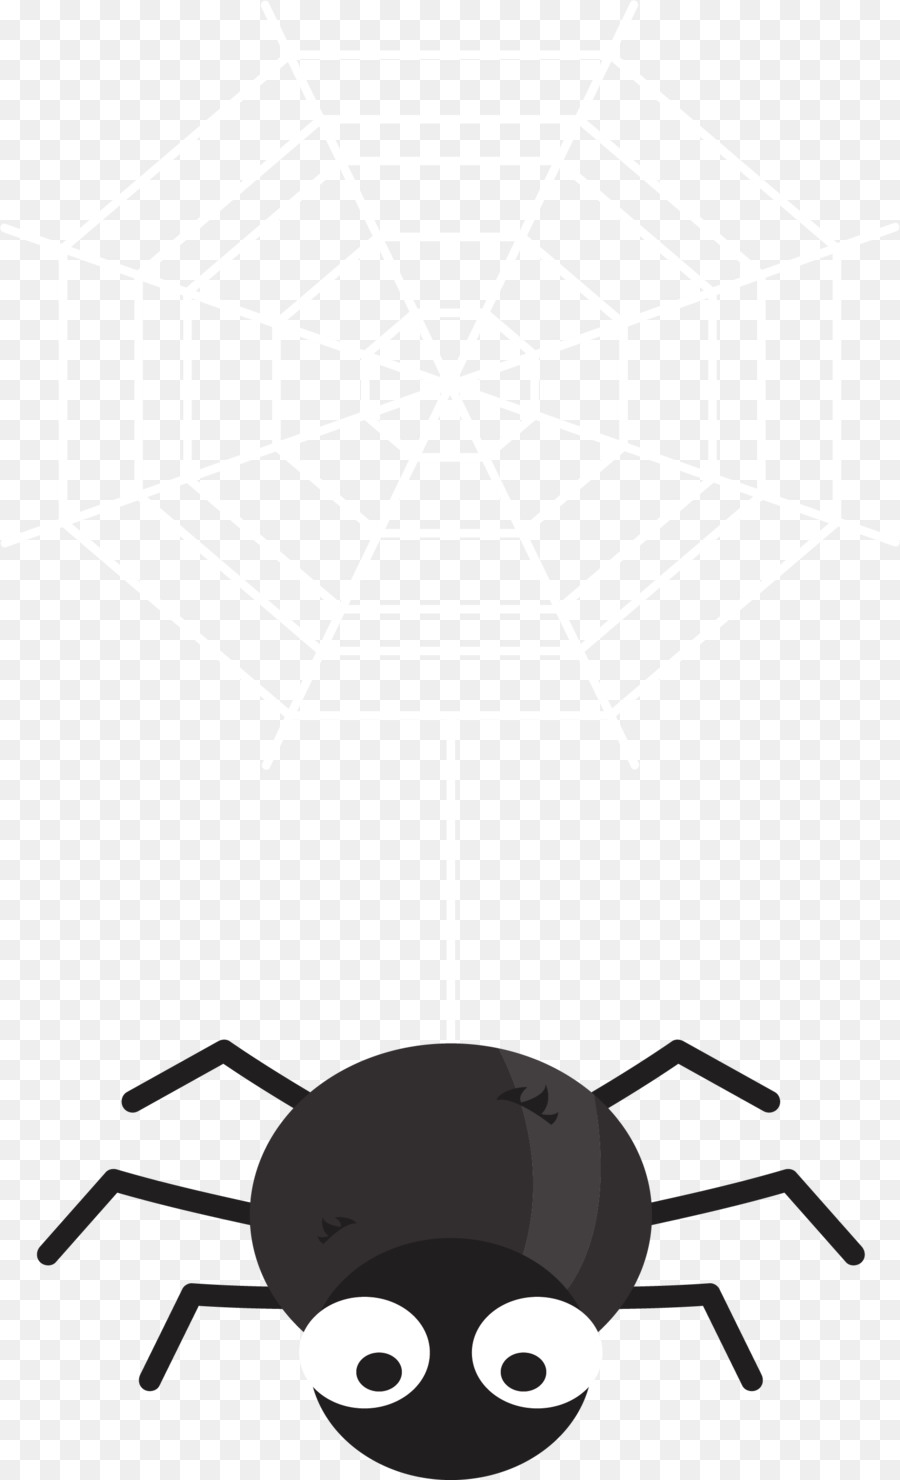 Spider Euclidean vector Black and white - Black spider webs png download - 1720*2828 - Free Transparent Spider png Download.